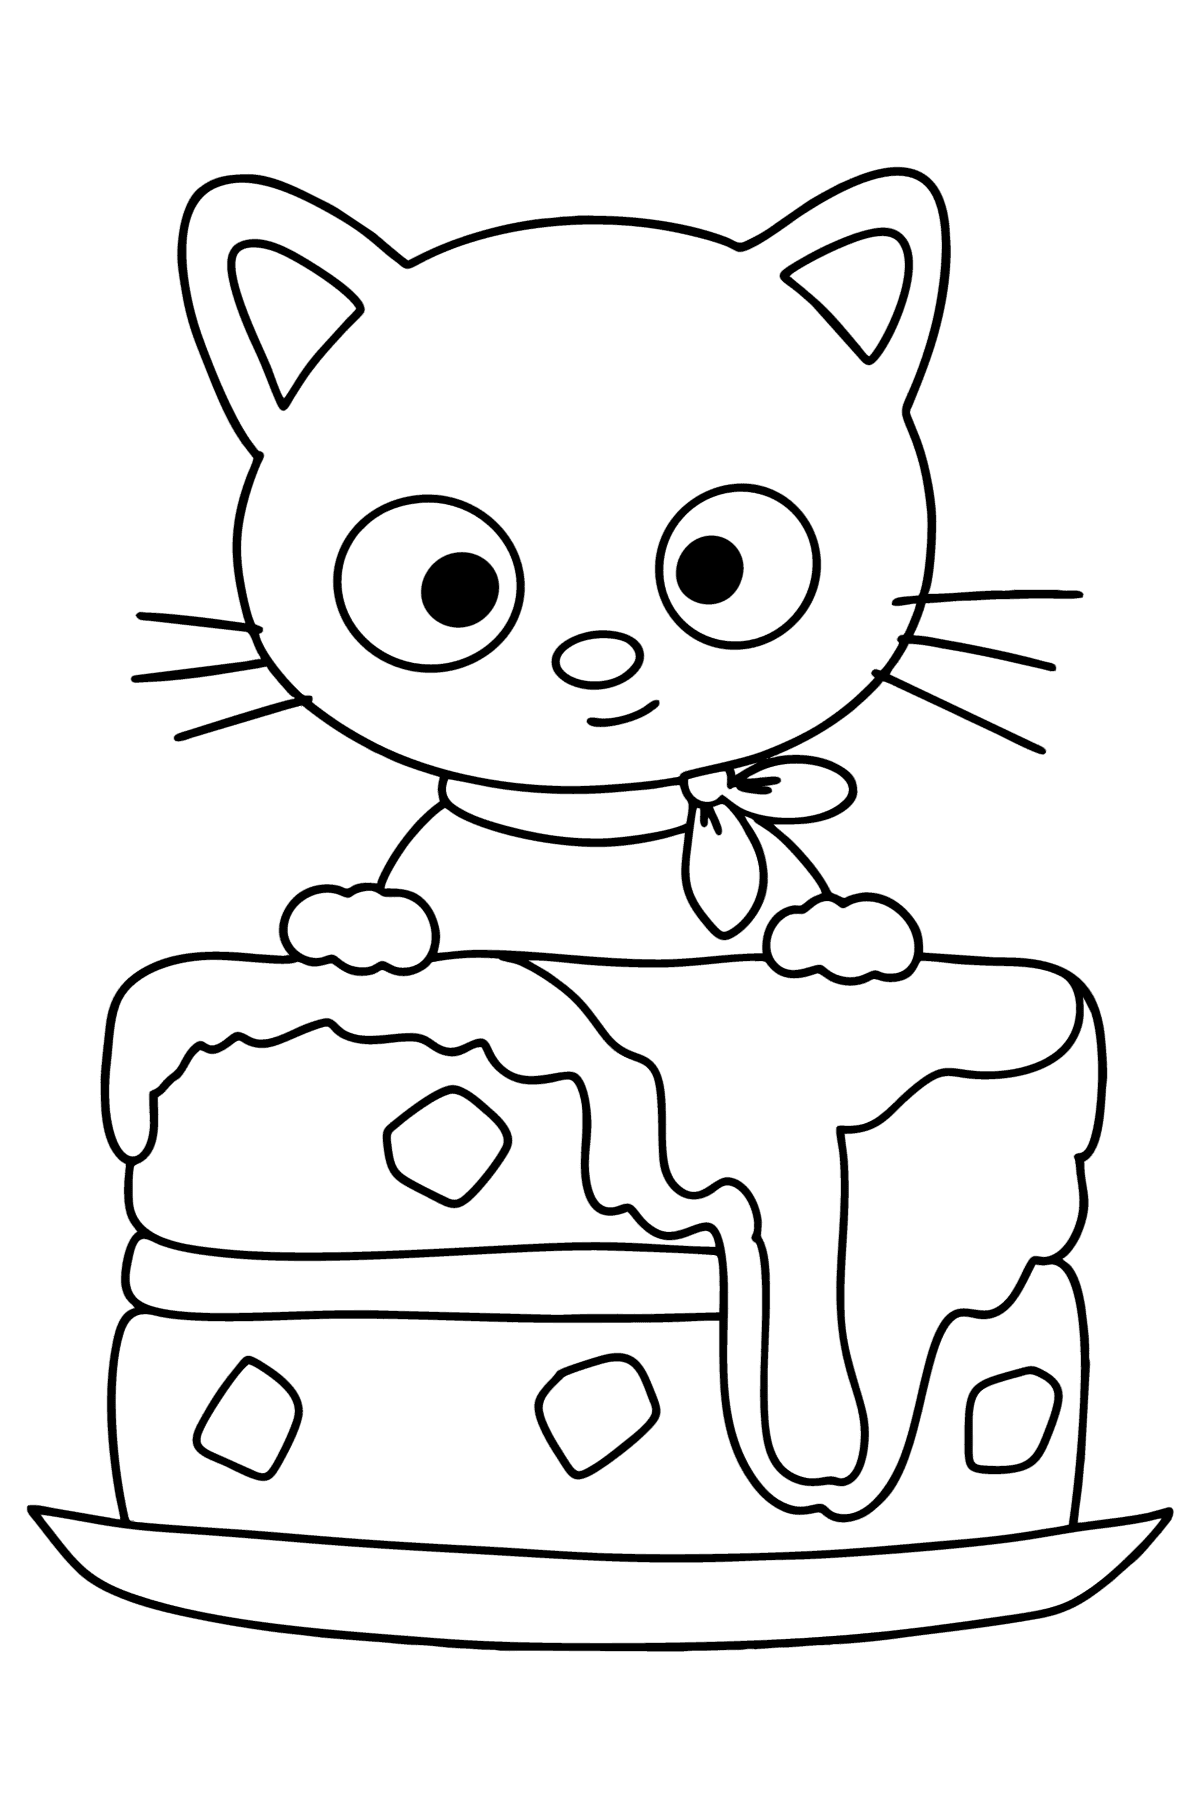 Dibujo de Hello Kitty Chococat para colorear - Dibujos para Colorear para Niños